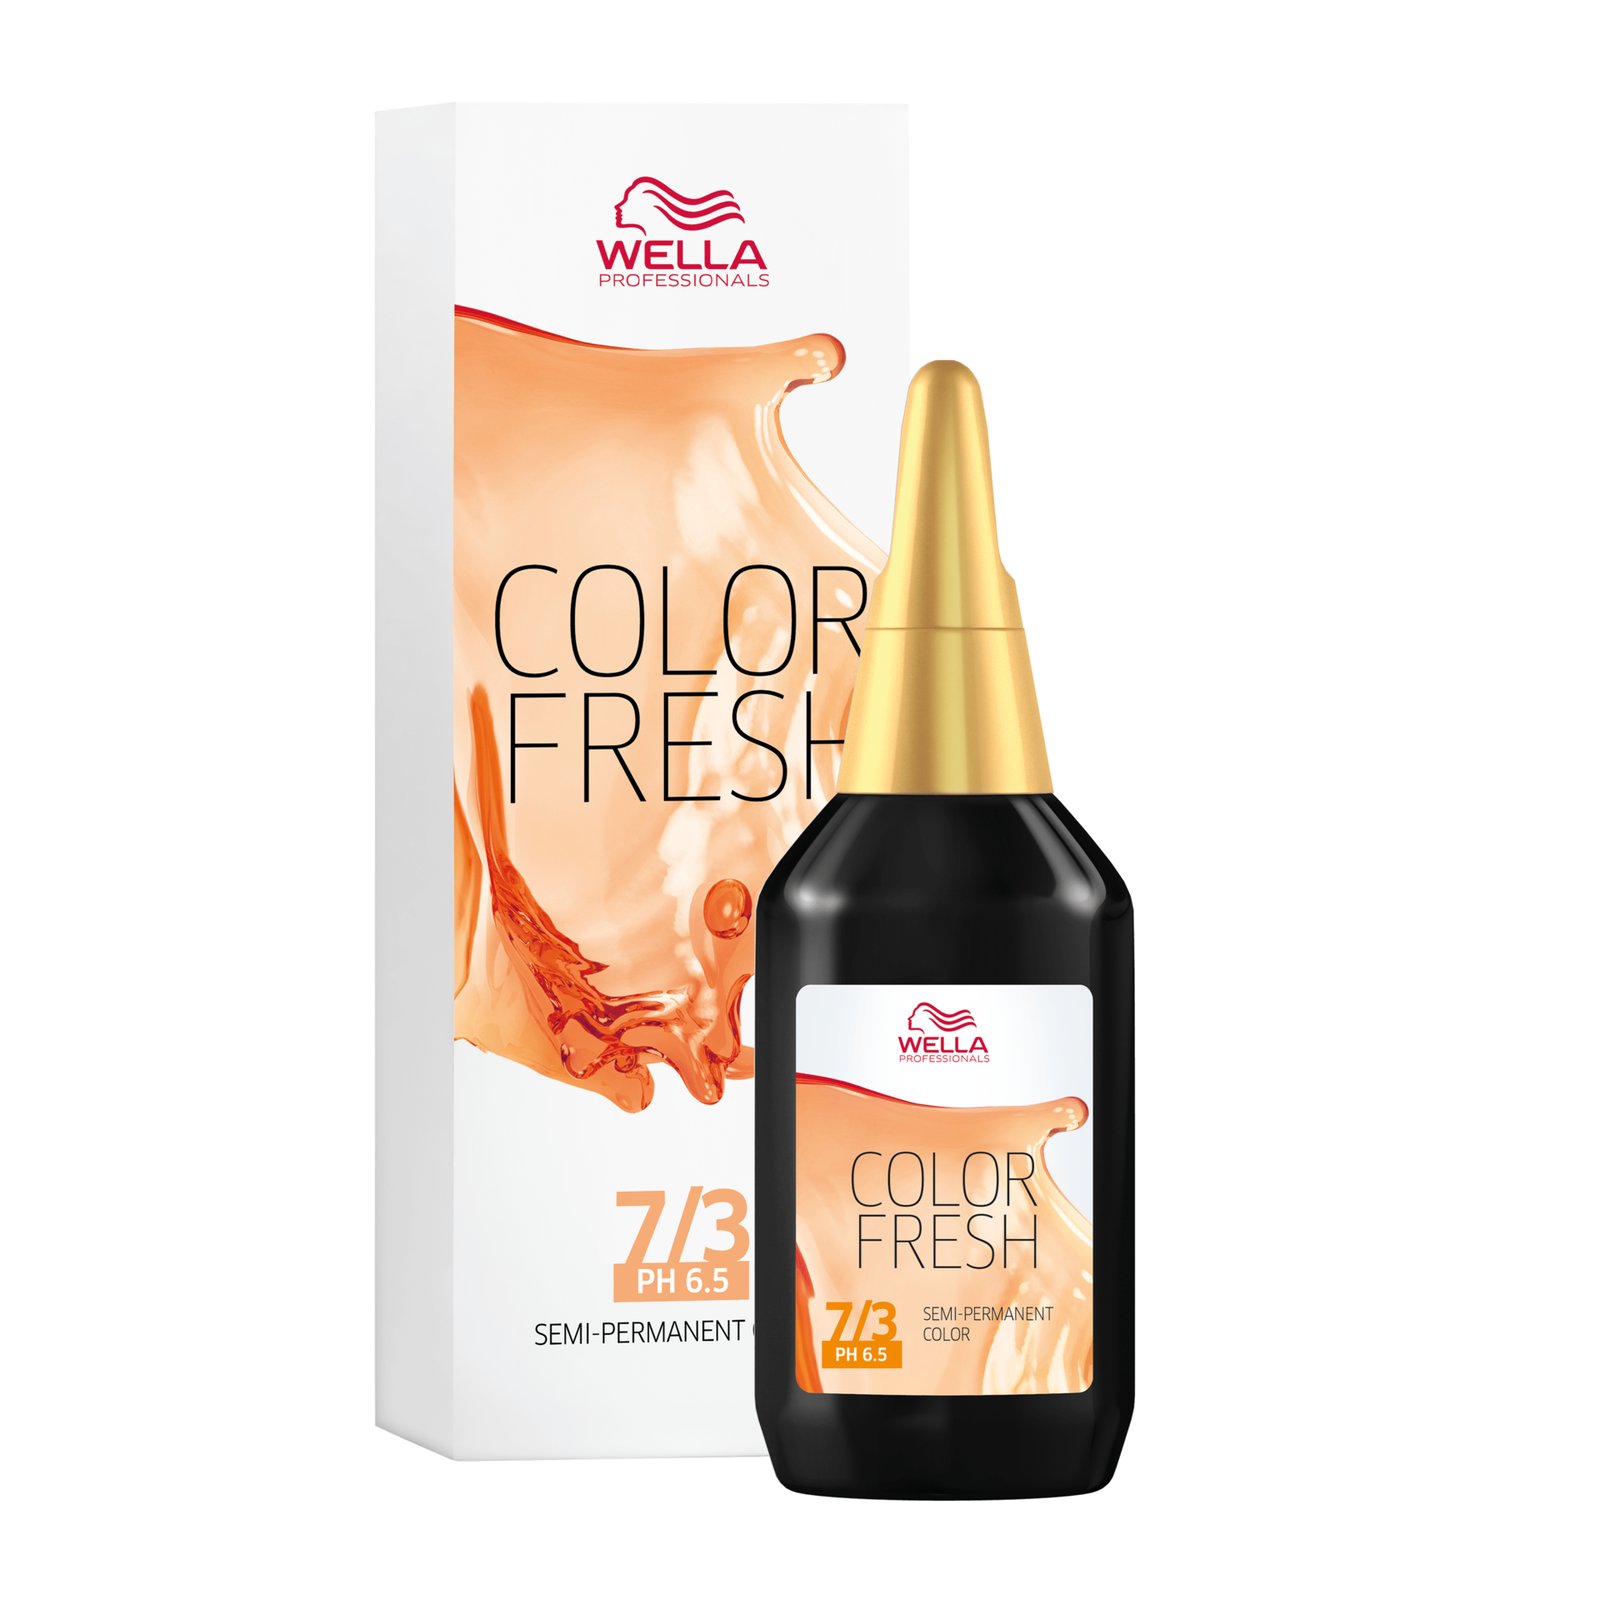 Wella Professionals Color Fresh 7/3 Medium Gold Blonde 75 ml